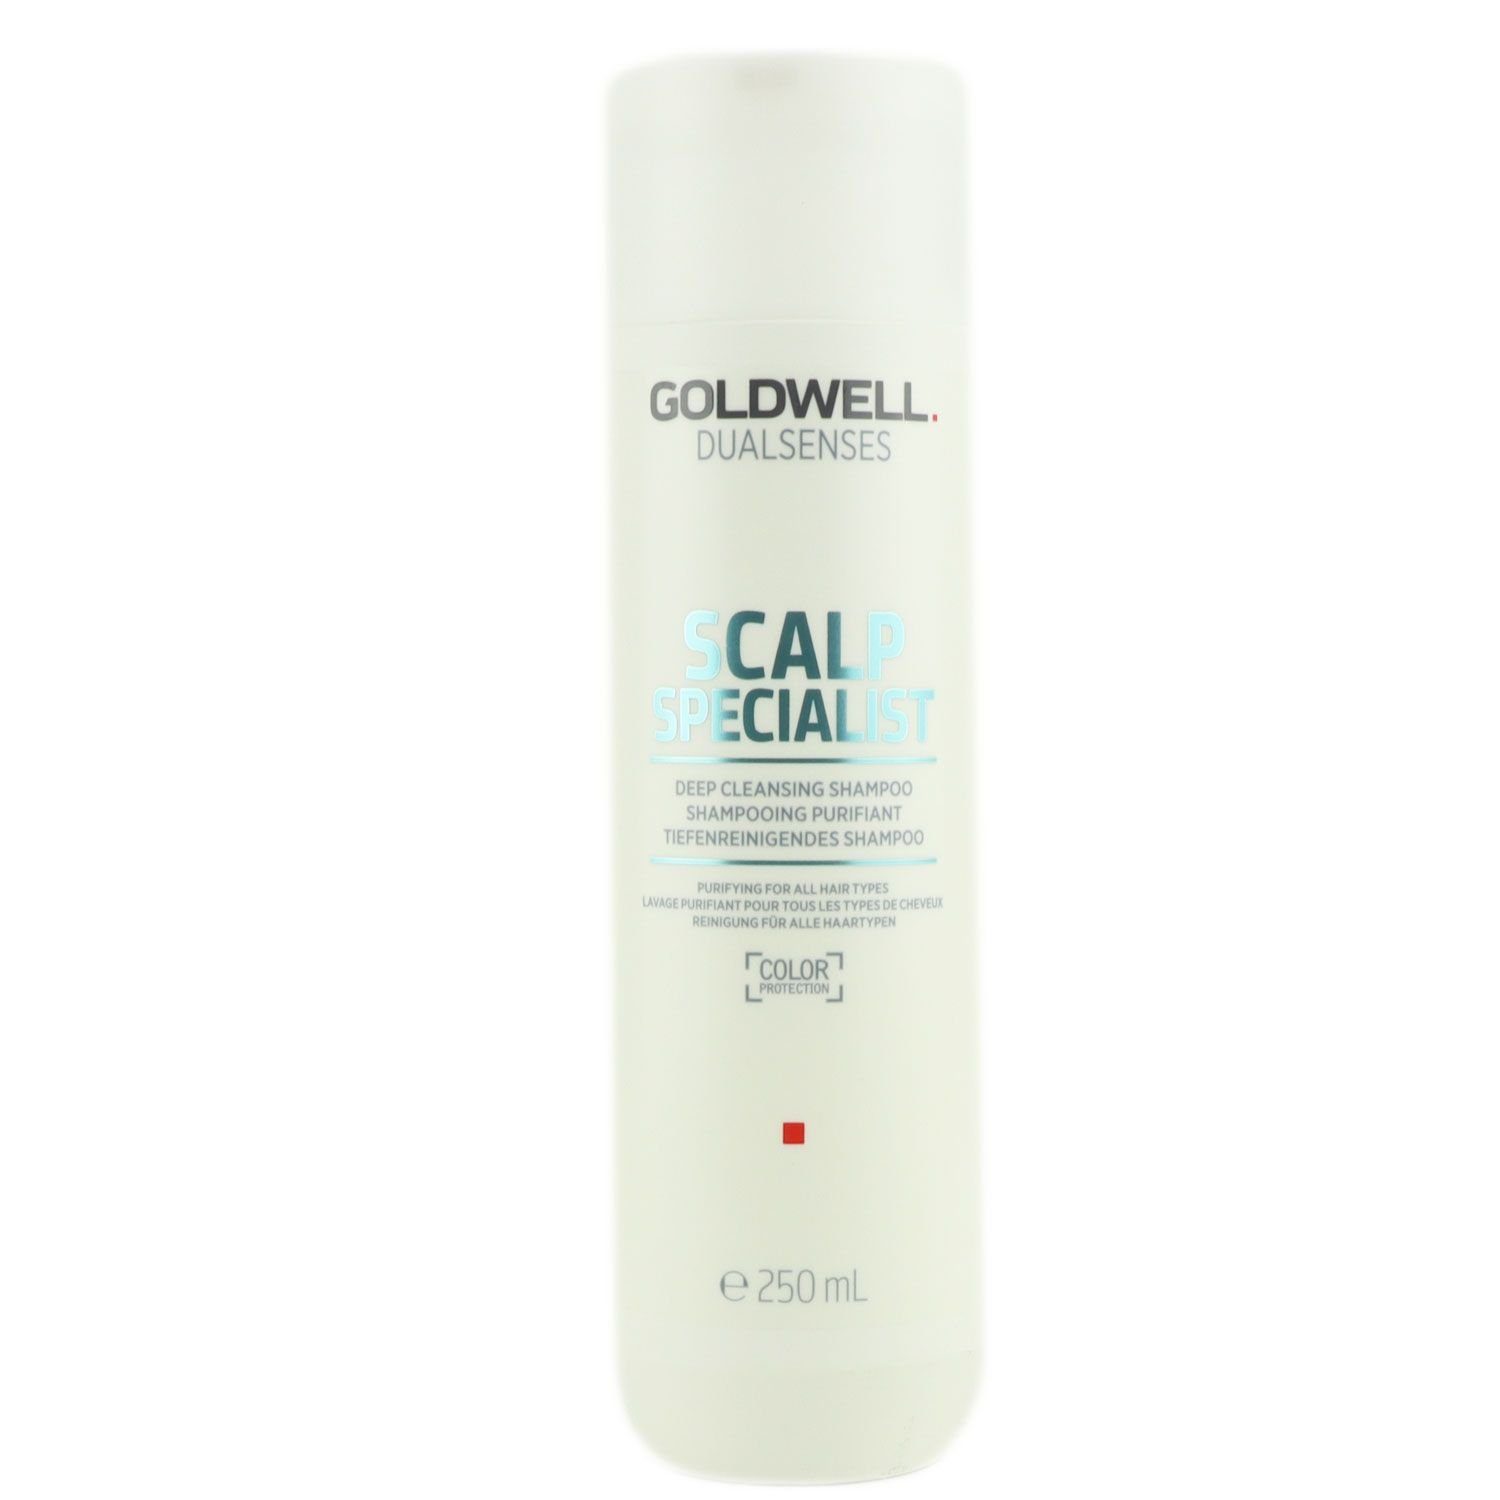 Goldwell Haarshampoo Dualsenses Scalp Specialist Deep Cleansing Shampoo  250ml